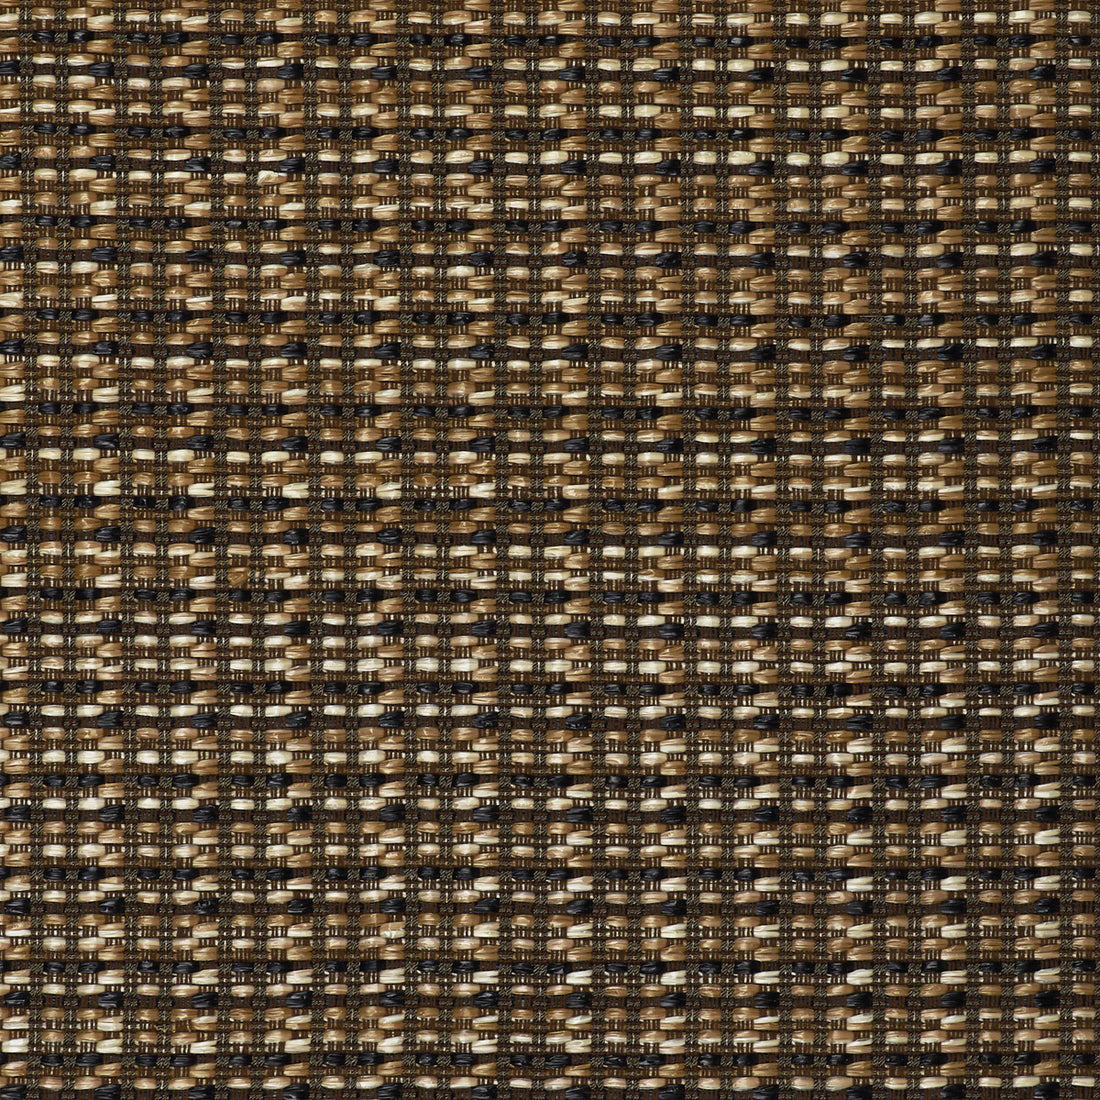 Mauregato fabric in chocolate color - pattern LCT1002.003.0 - by Gaston y Daniela in the Lorenzo Castillo V collection